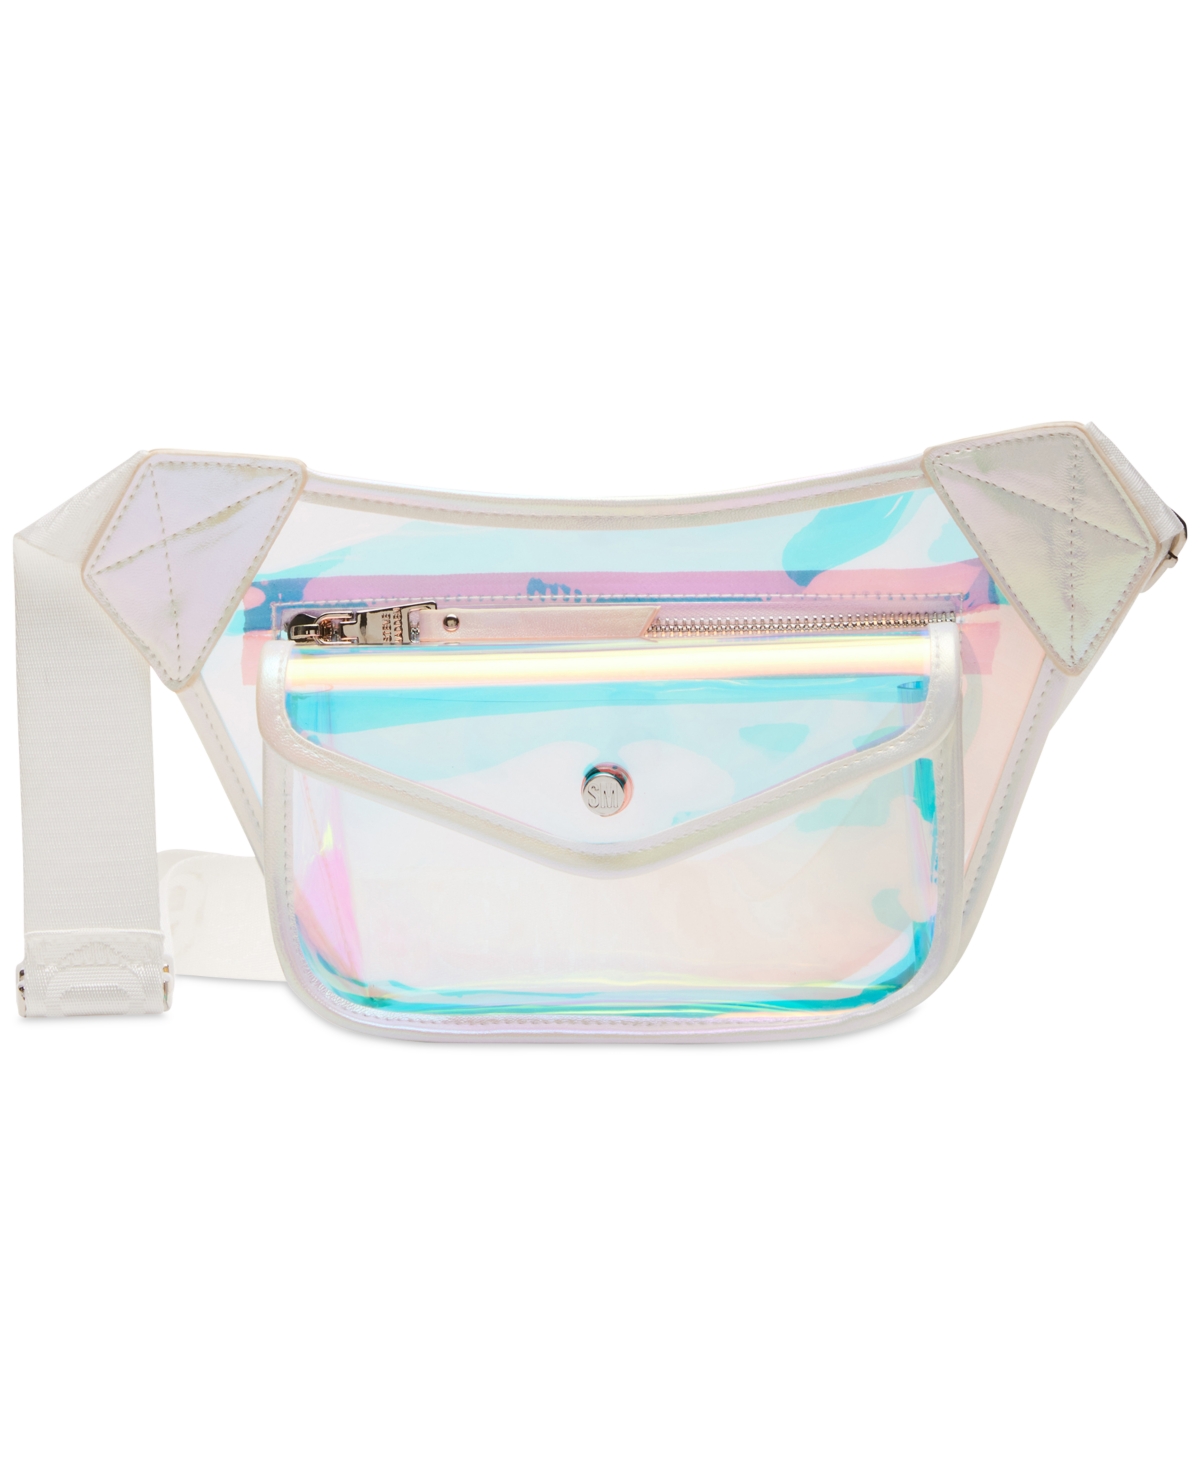 Steve Madden Women's Iridescent Clear Jelly Belt Bag